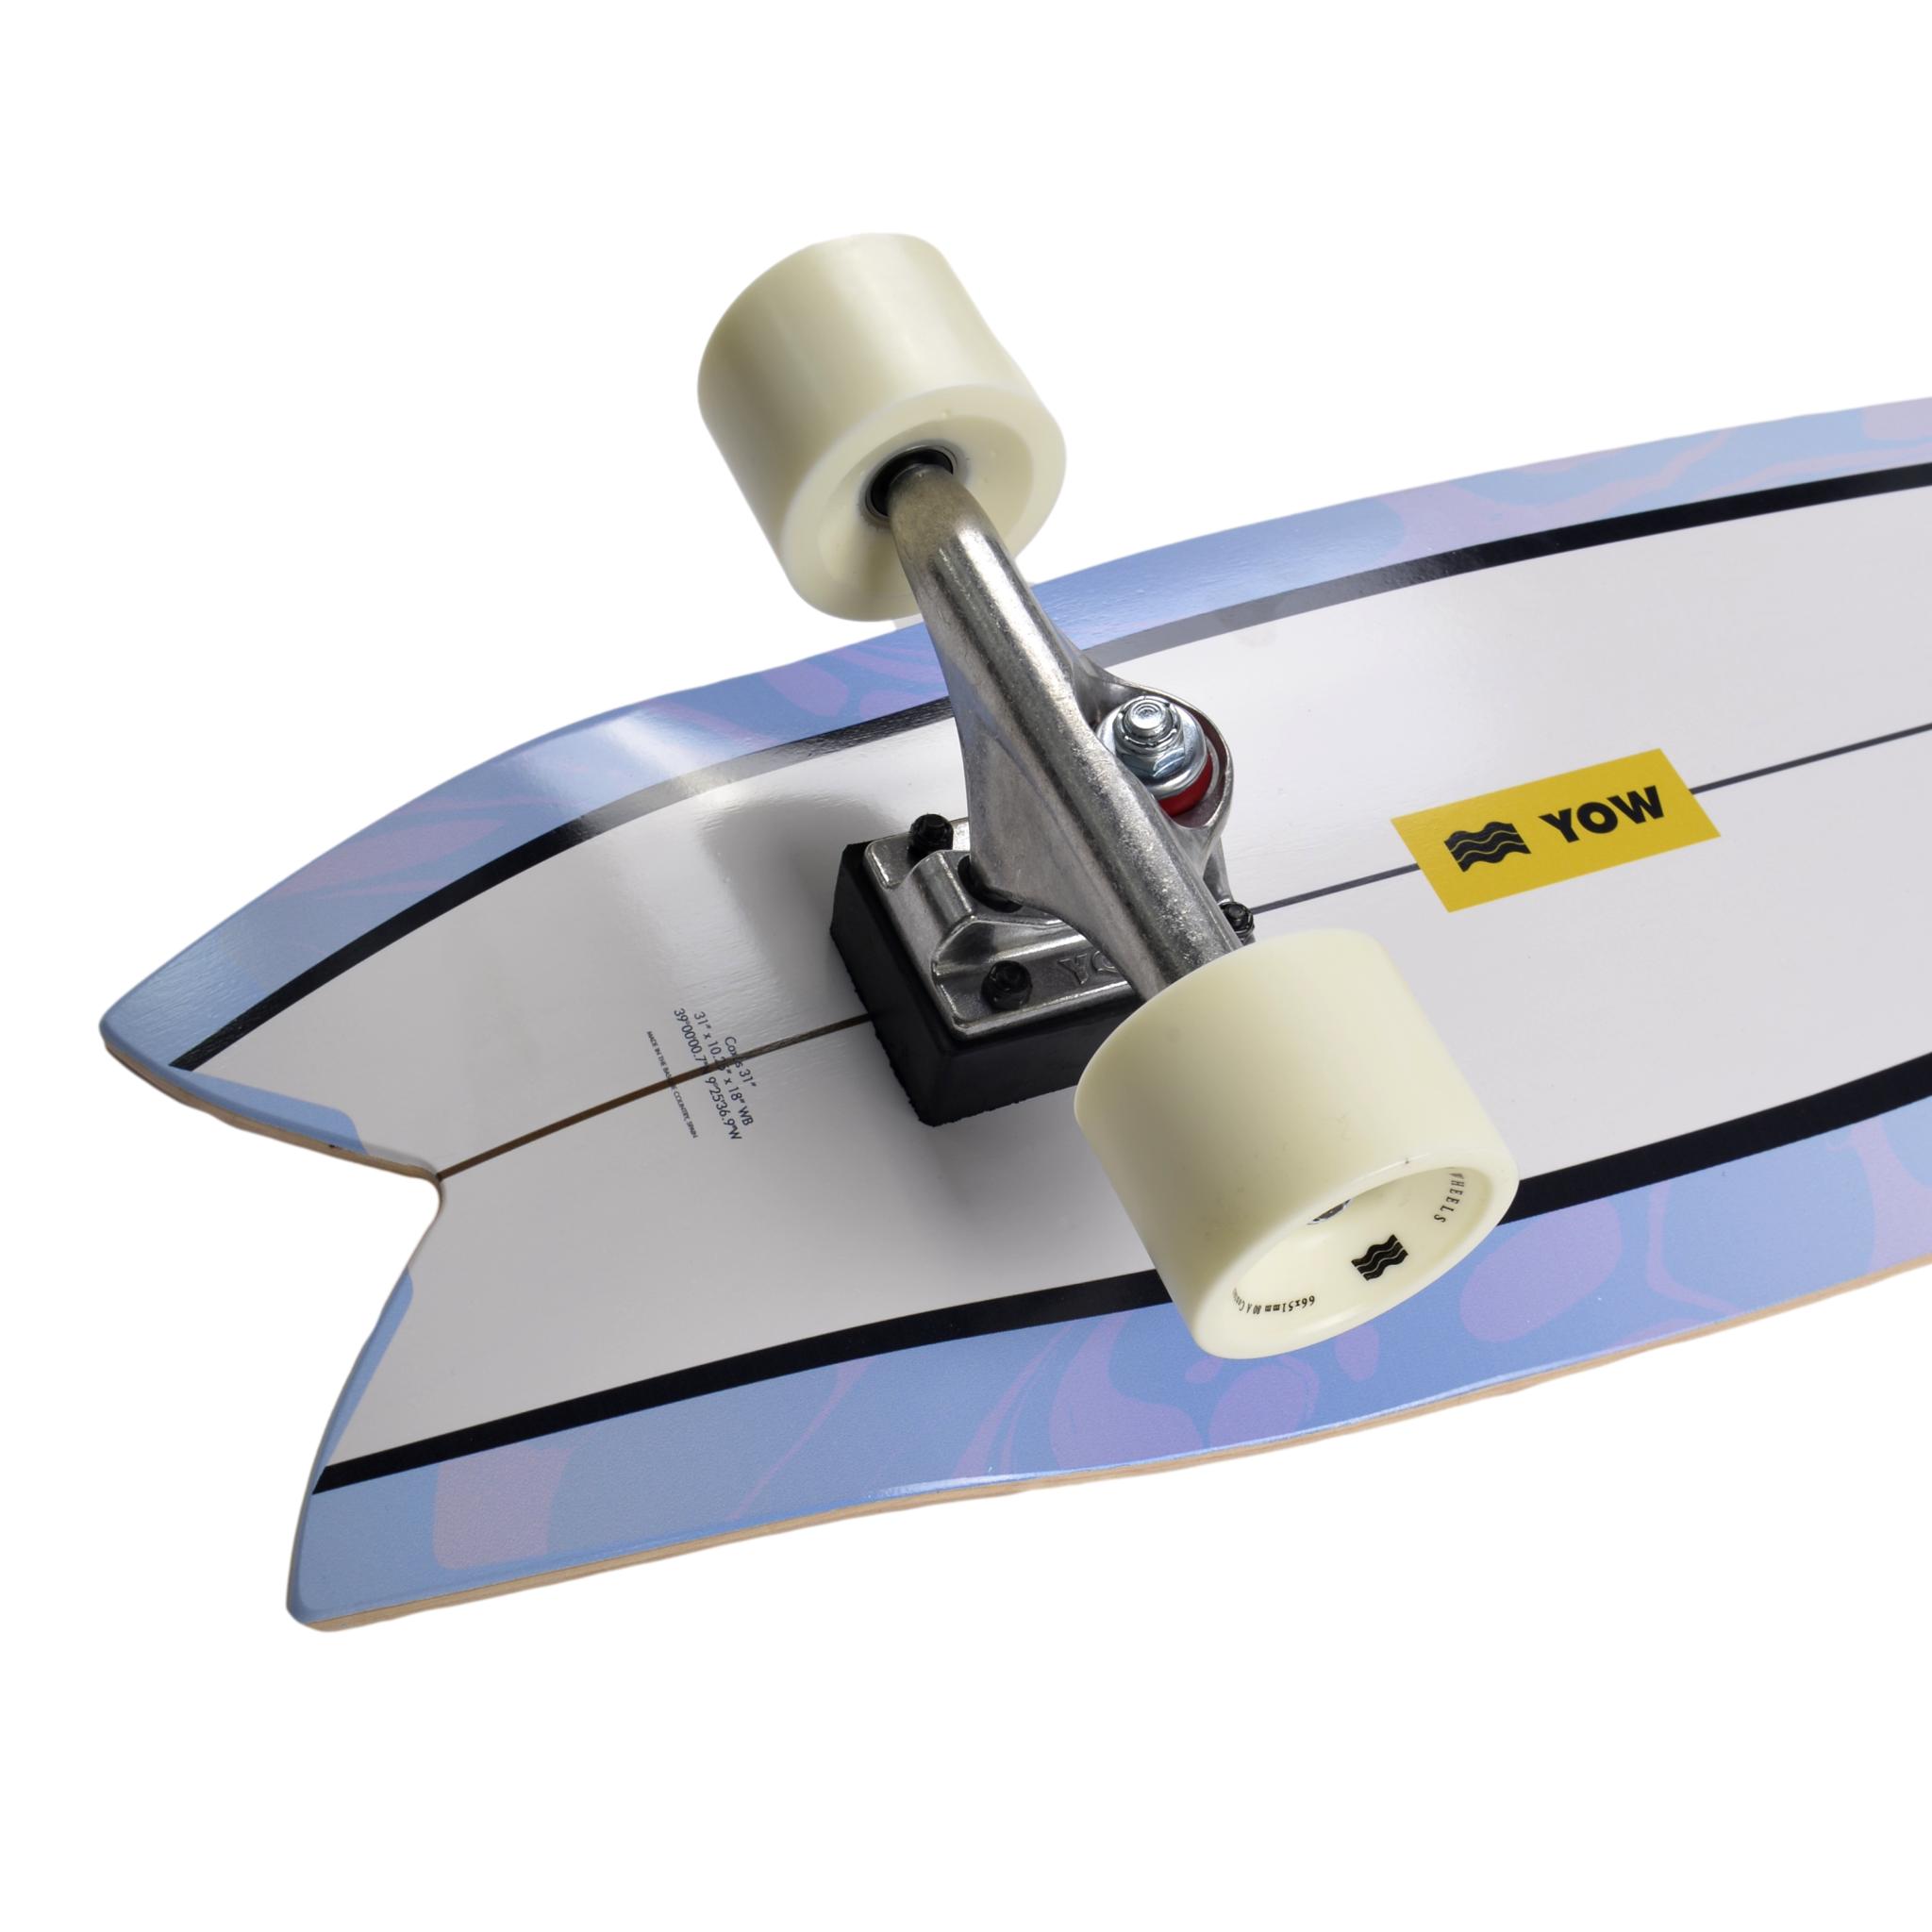 Yow Coxos Surf Skate Power Surfing 31